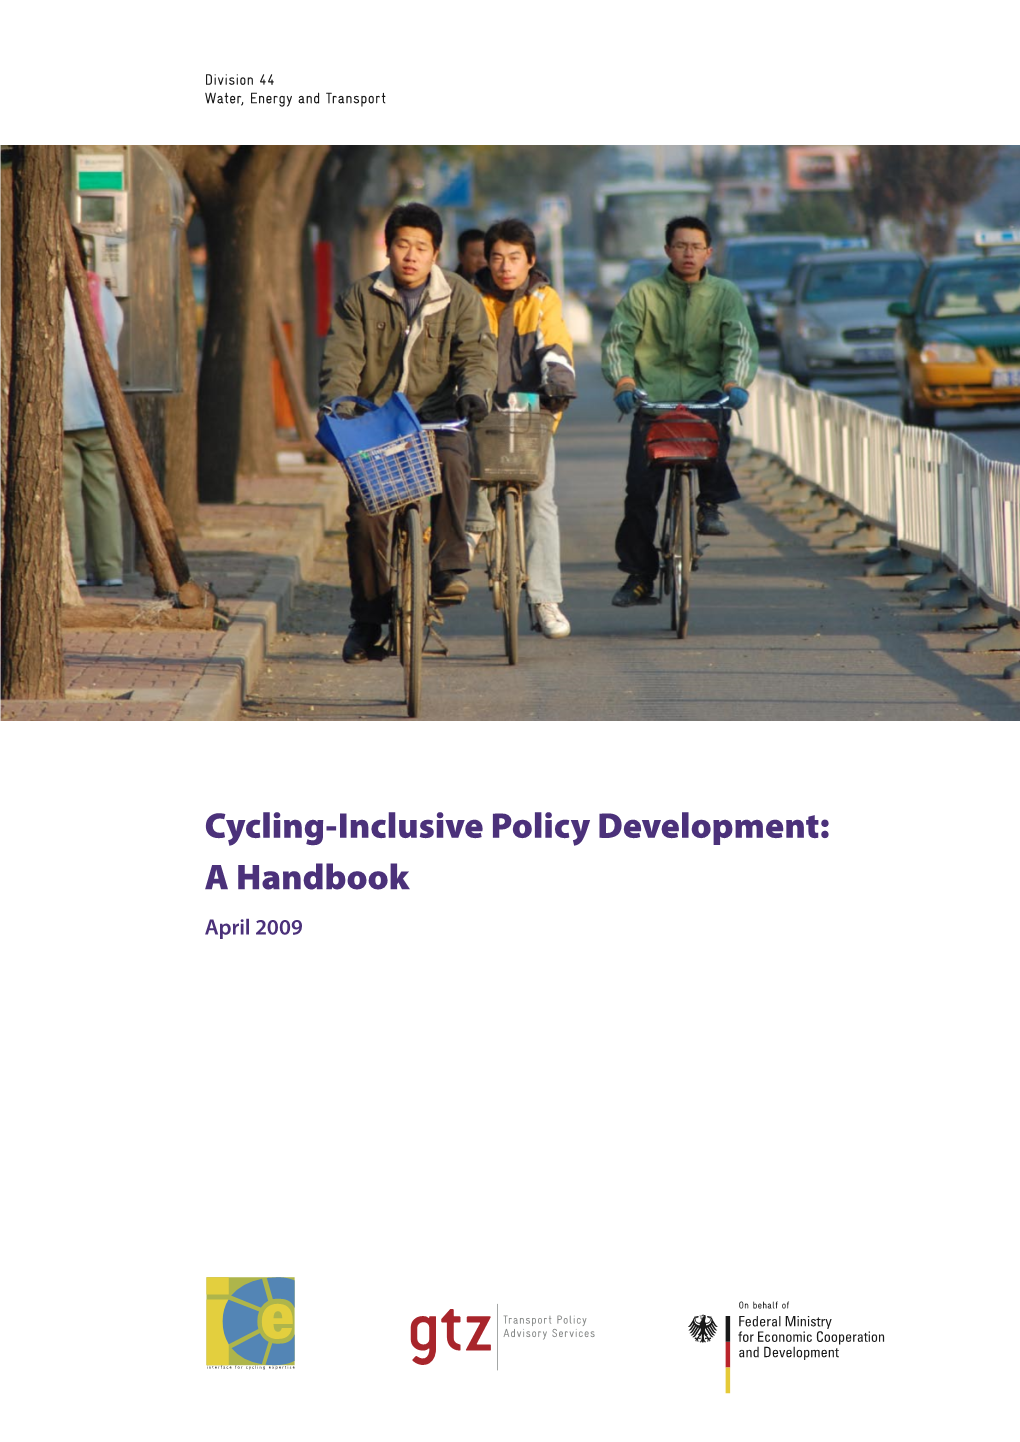 Cycling-Inclusive Policy Development: a Handbook April 2009